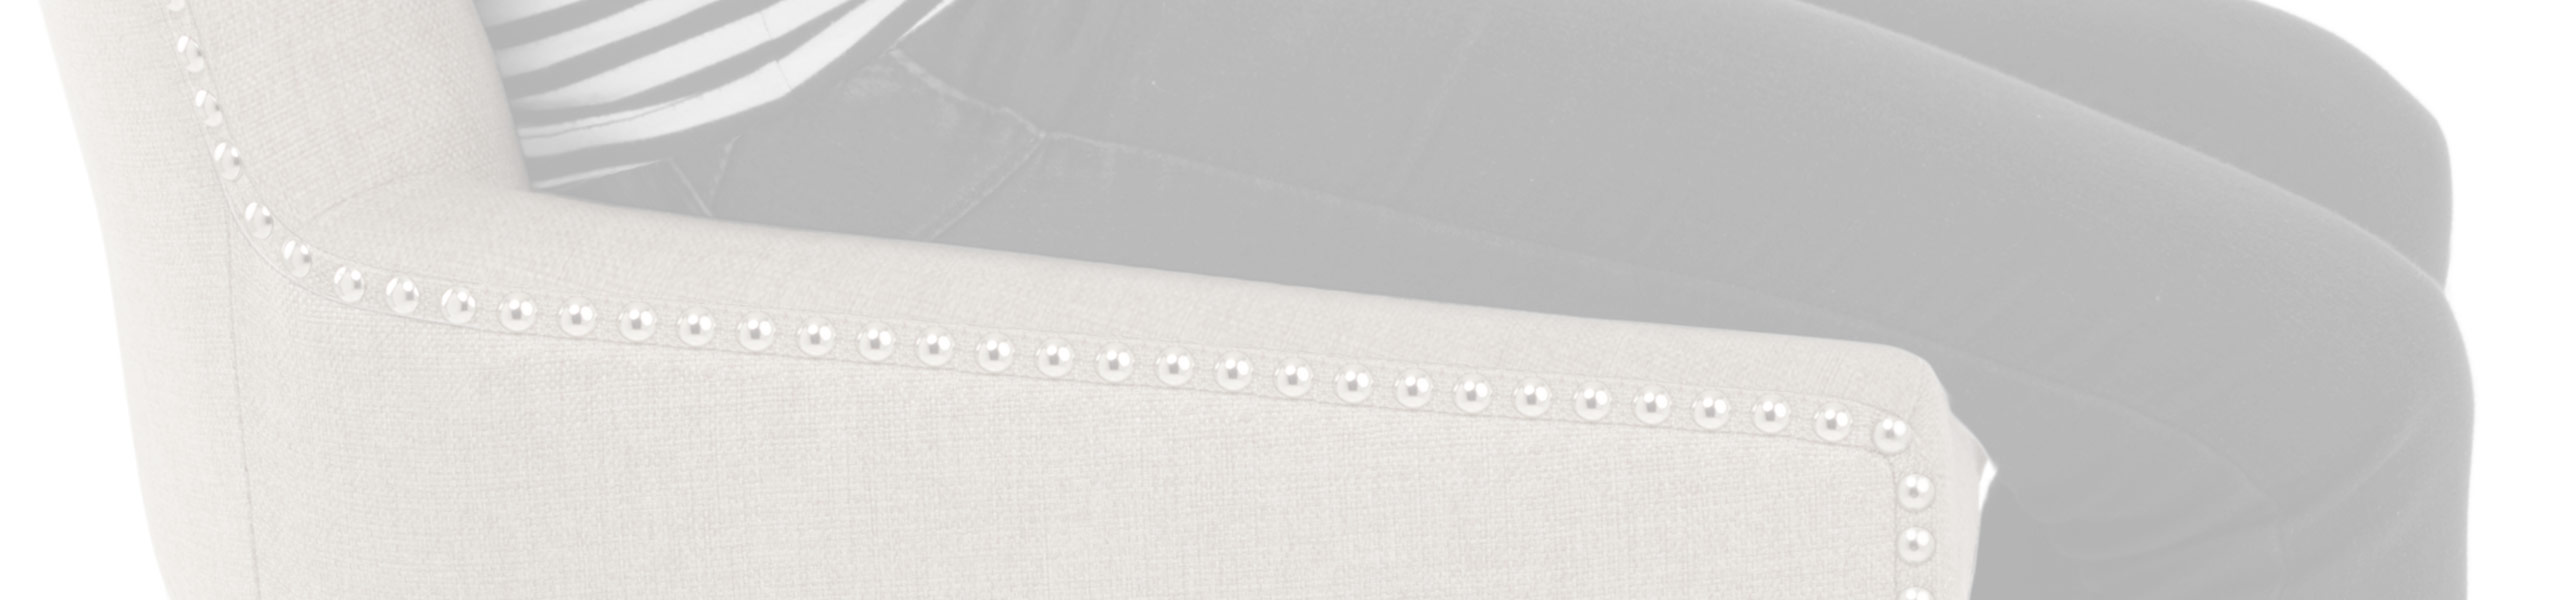 Knightsbridge Oak Stool Tweed Fabric Review Banner